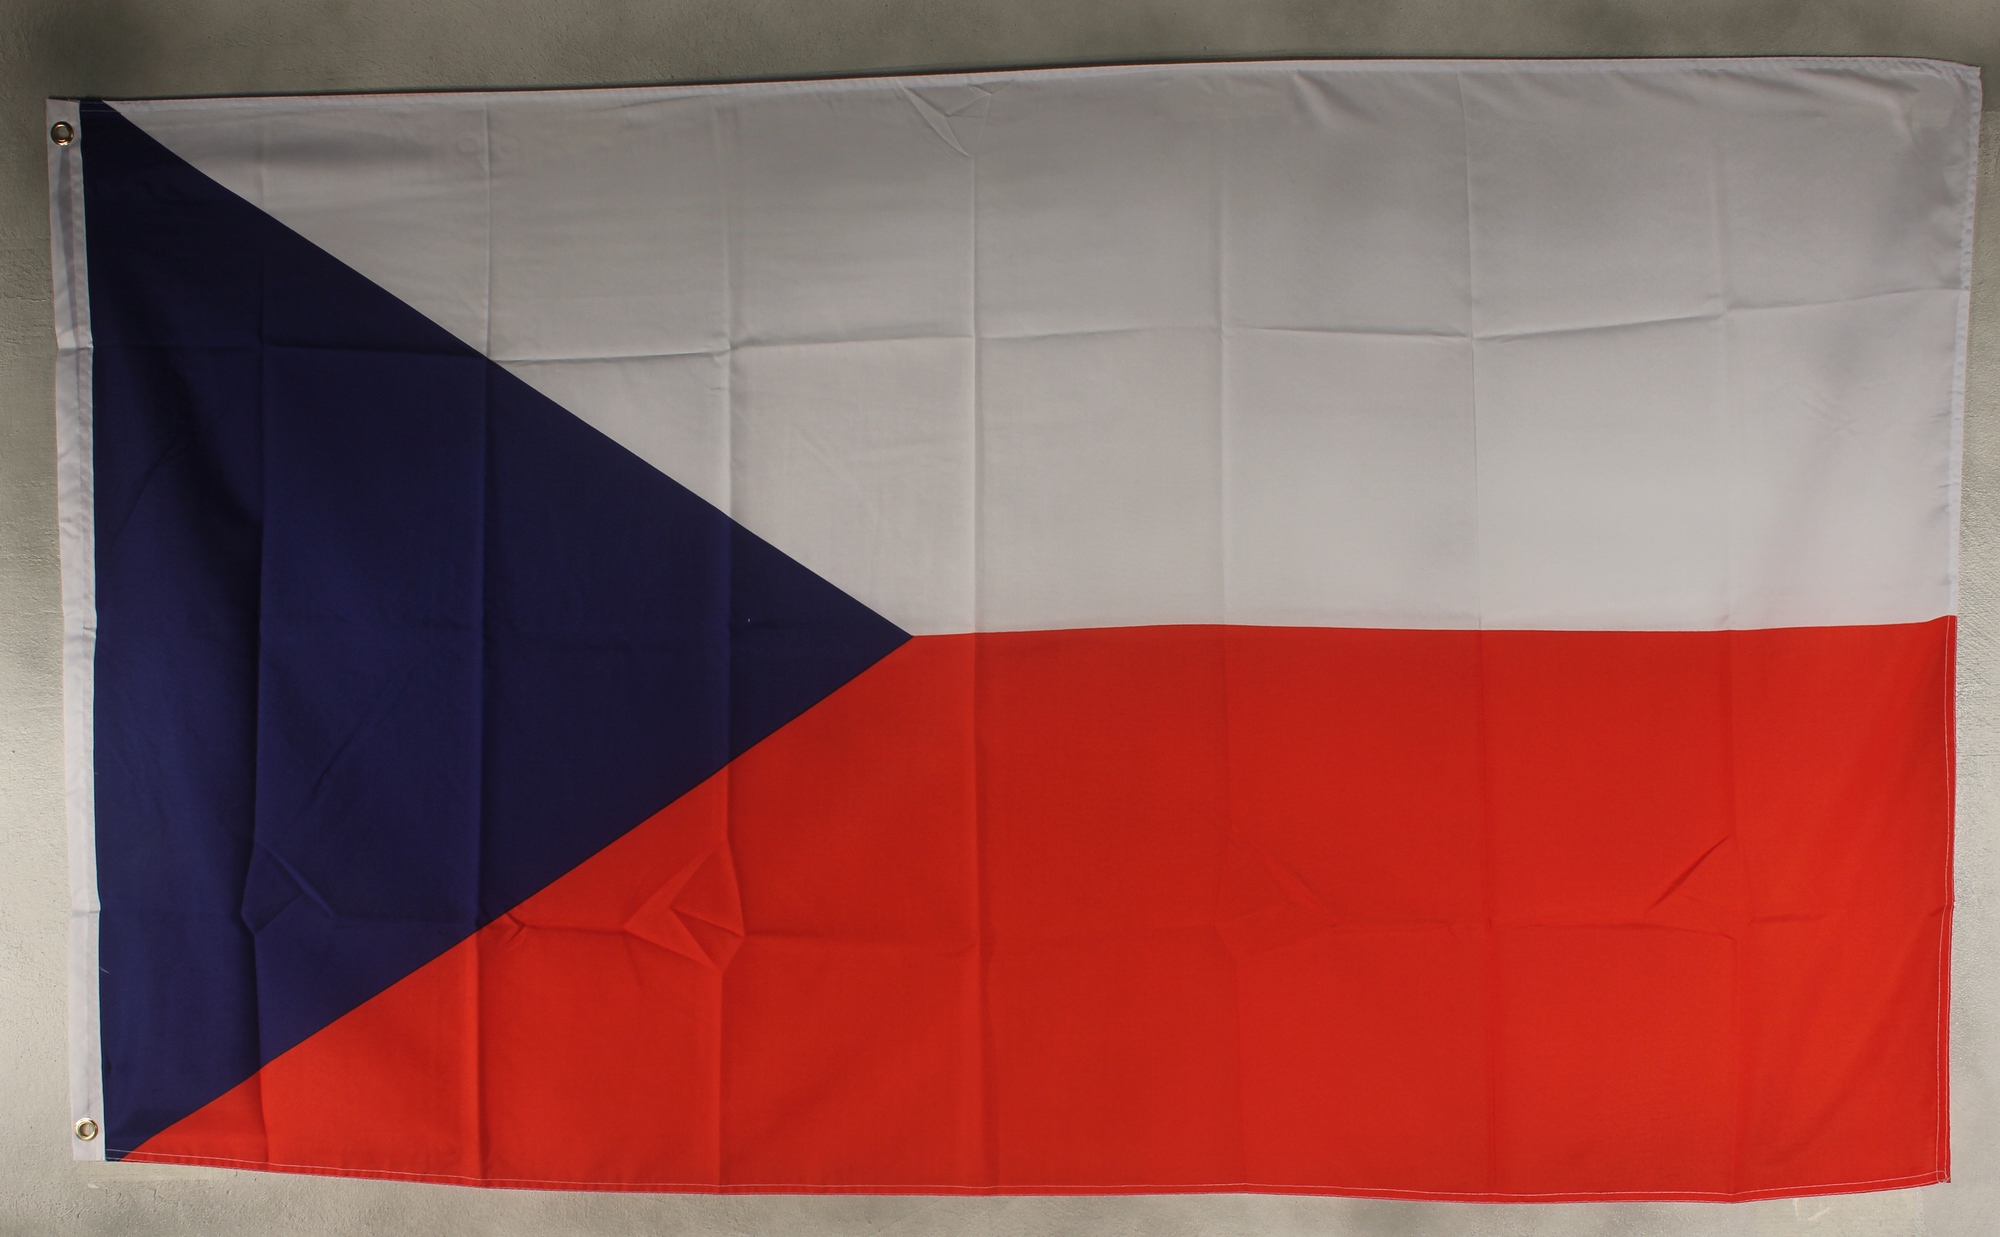 Flagge Tschechien Fahne Tschechien